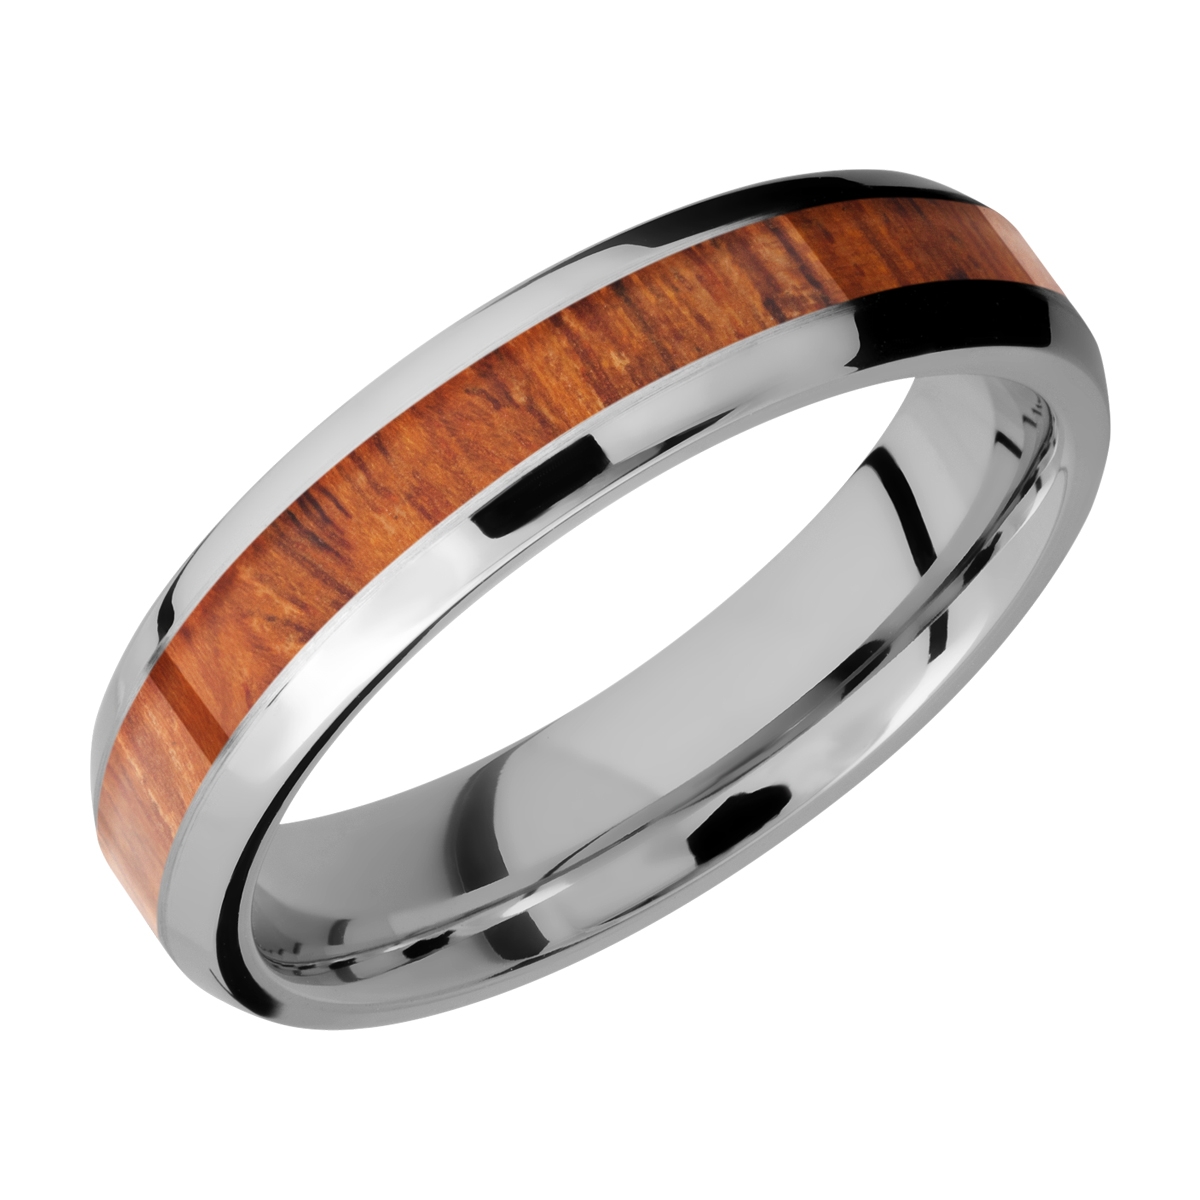 Lashbrook CC5B13(NS)/HARDWOOD Cobalt Chrome Wedding Ring or Band